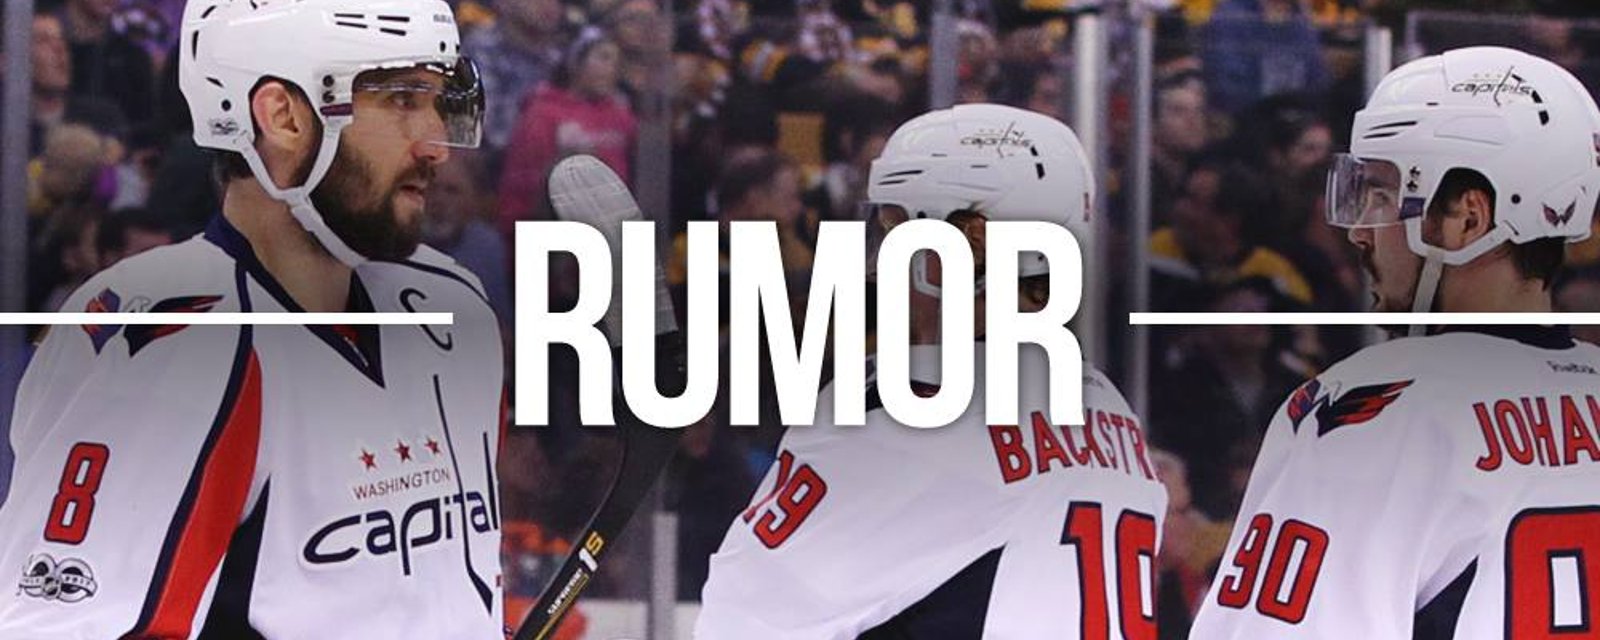 TRADE RUMOR: NHL LEGEND drops MAJOR BOMBSHELL regarding Capitals Key Players.